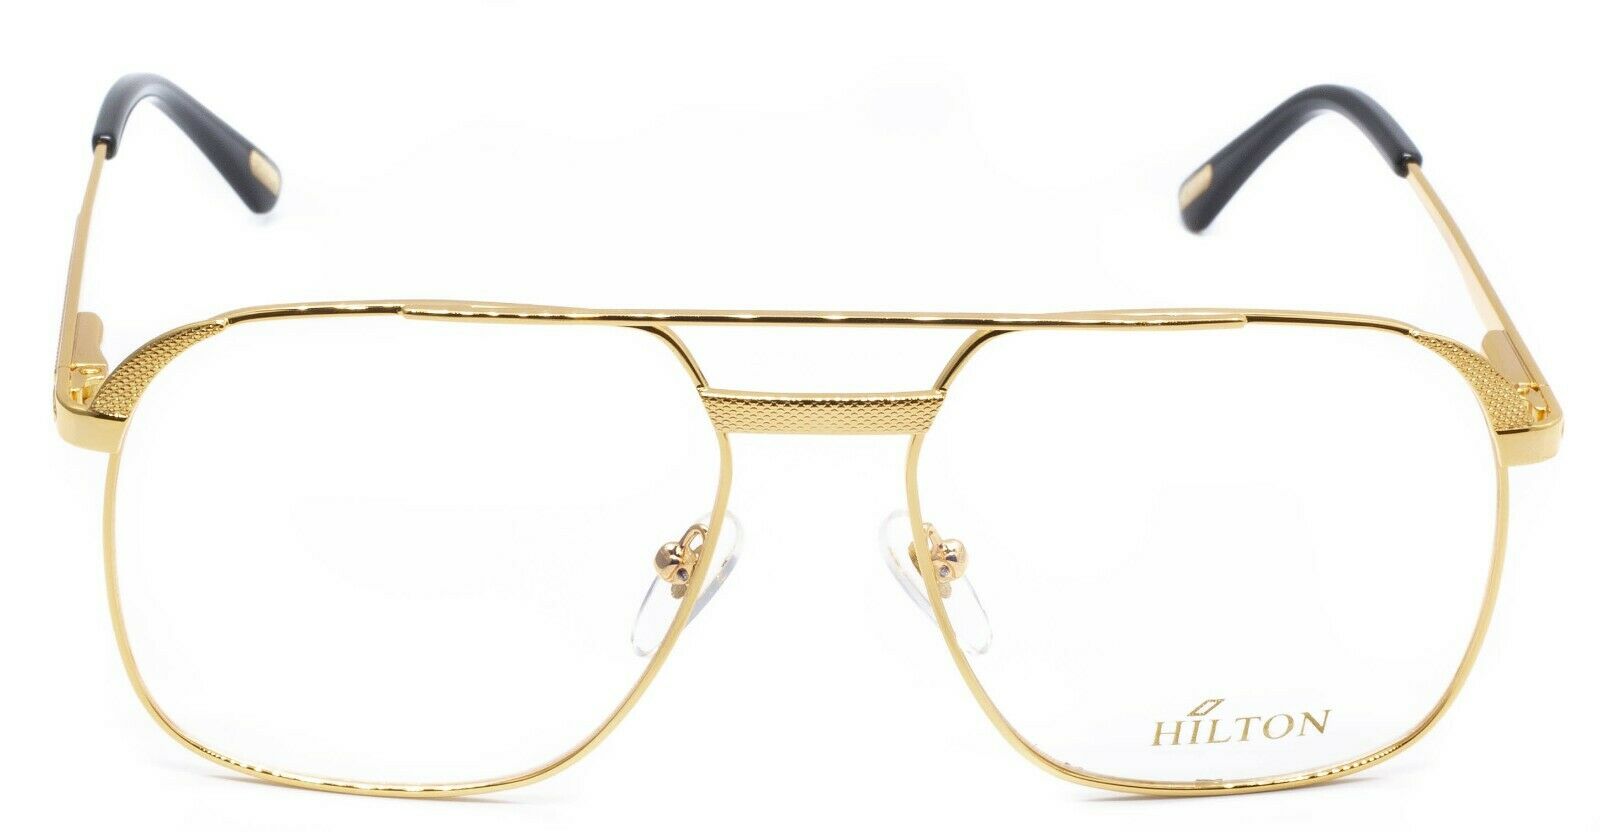 Hilton Eyewear Vintage Class 010 995 24KT 56x18mm FRAMES RX Optical - New NOS